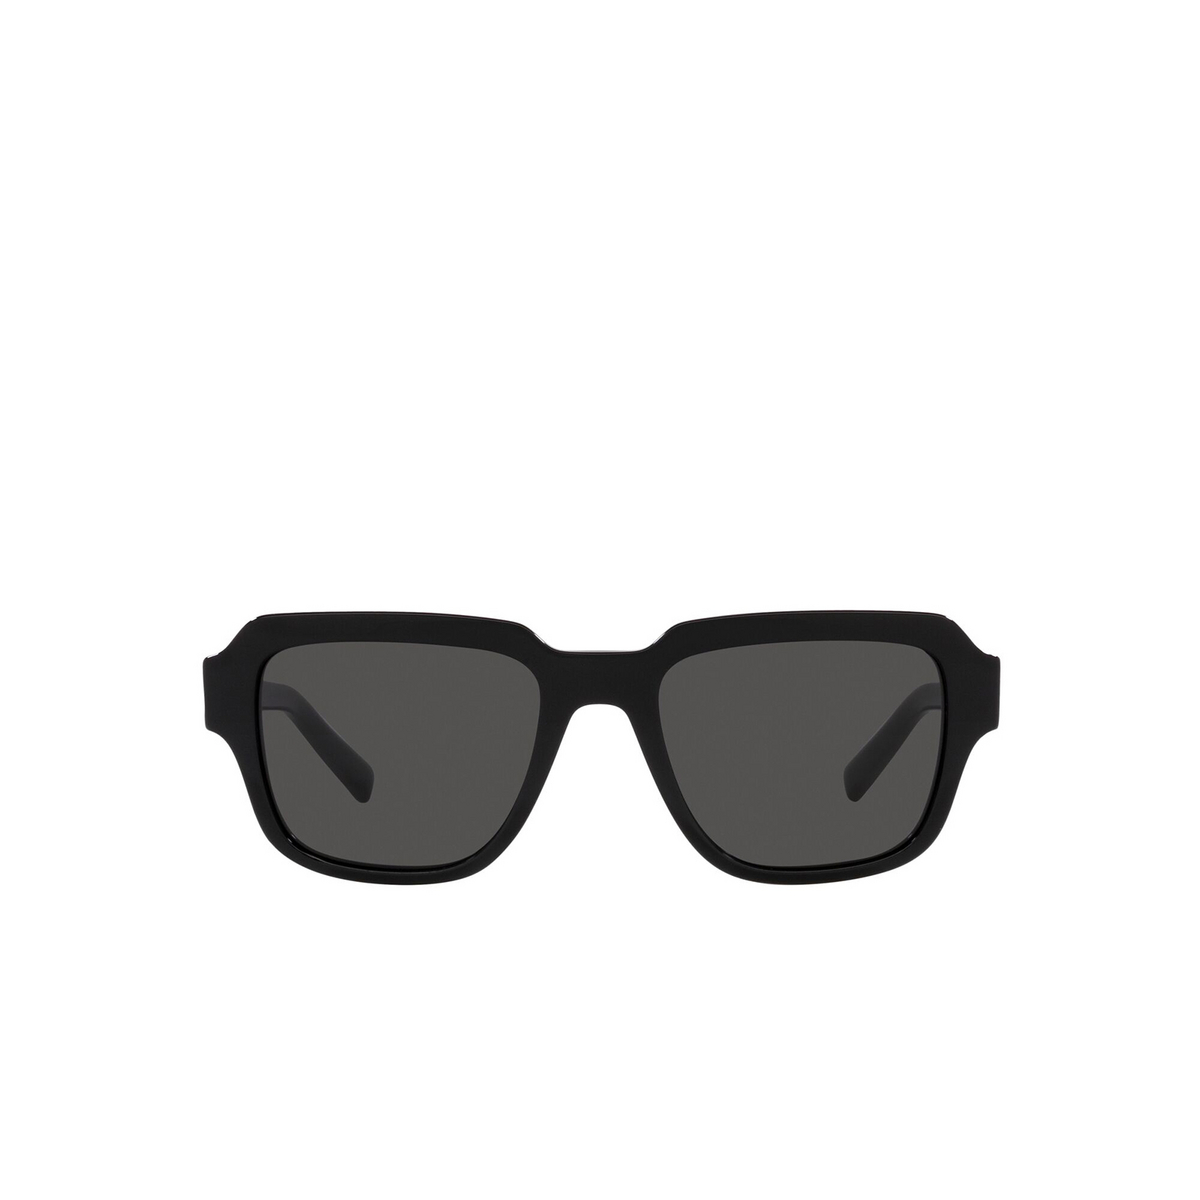 Dolce & Gabbana DG4402 Sunglasses 501/87 Black - front view